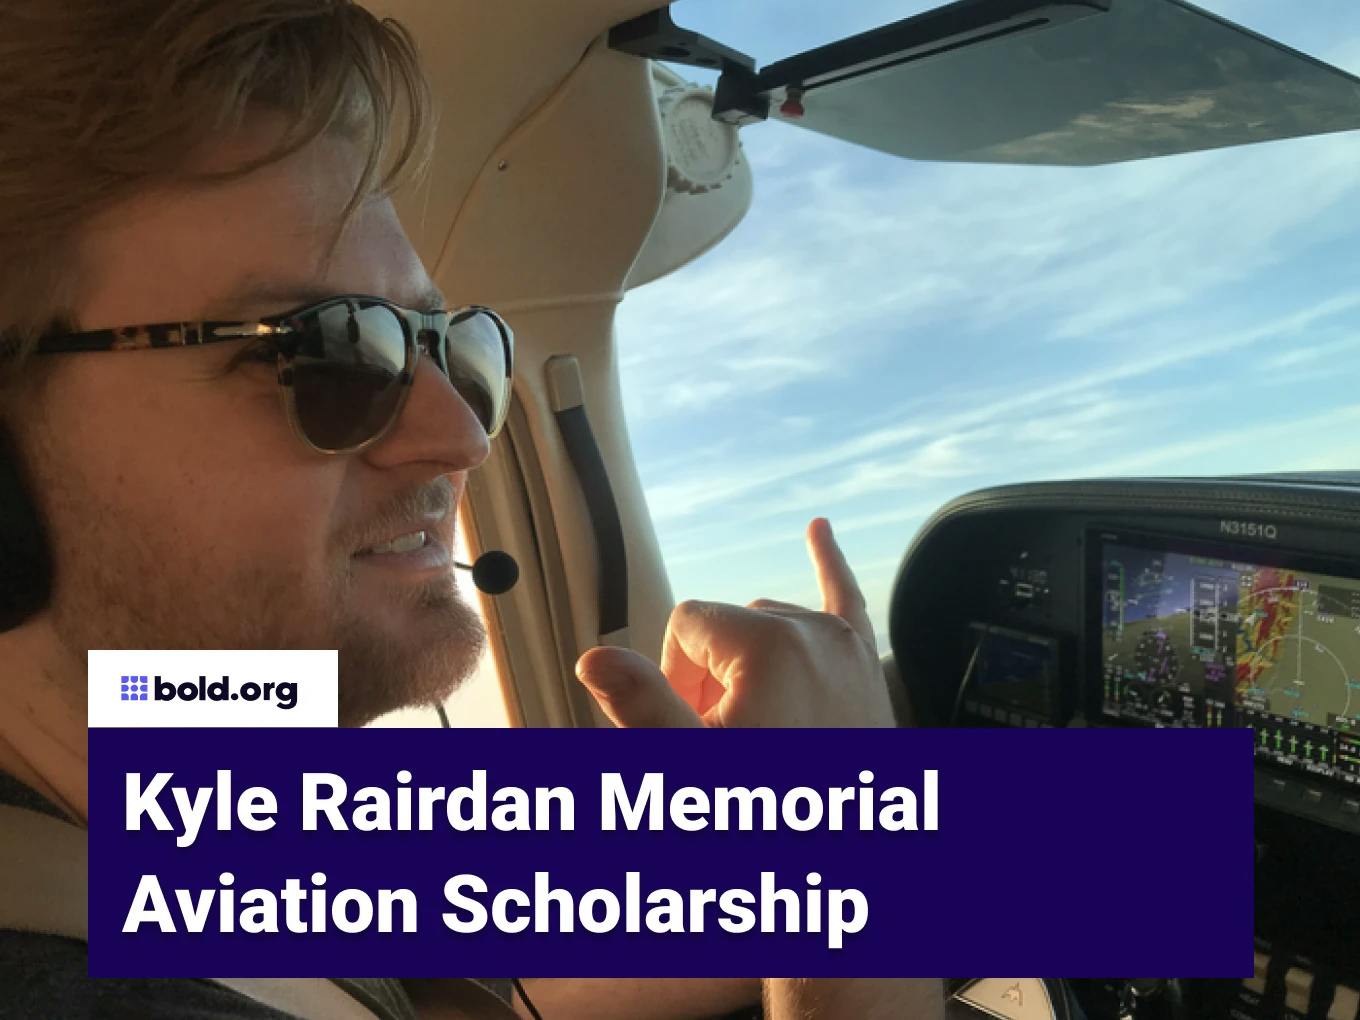 Kyle Rairdan Memorial Aviation Scholarship